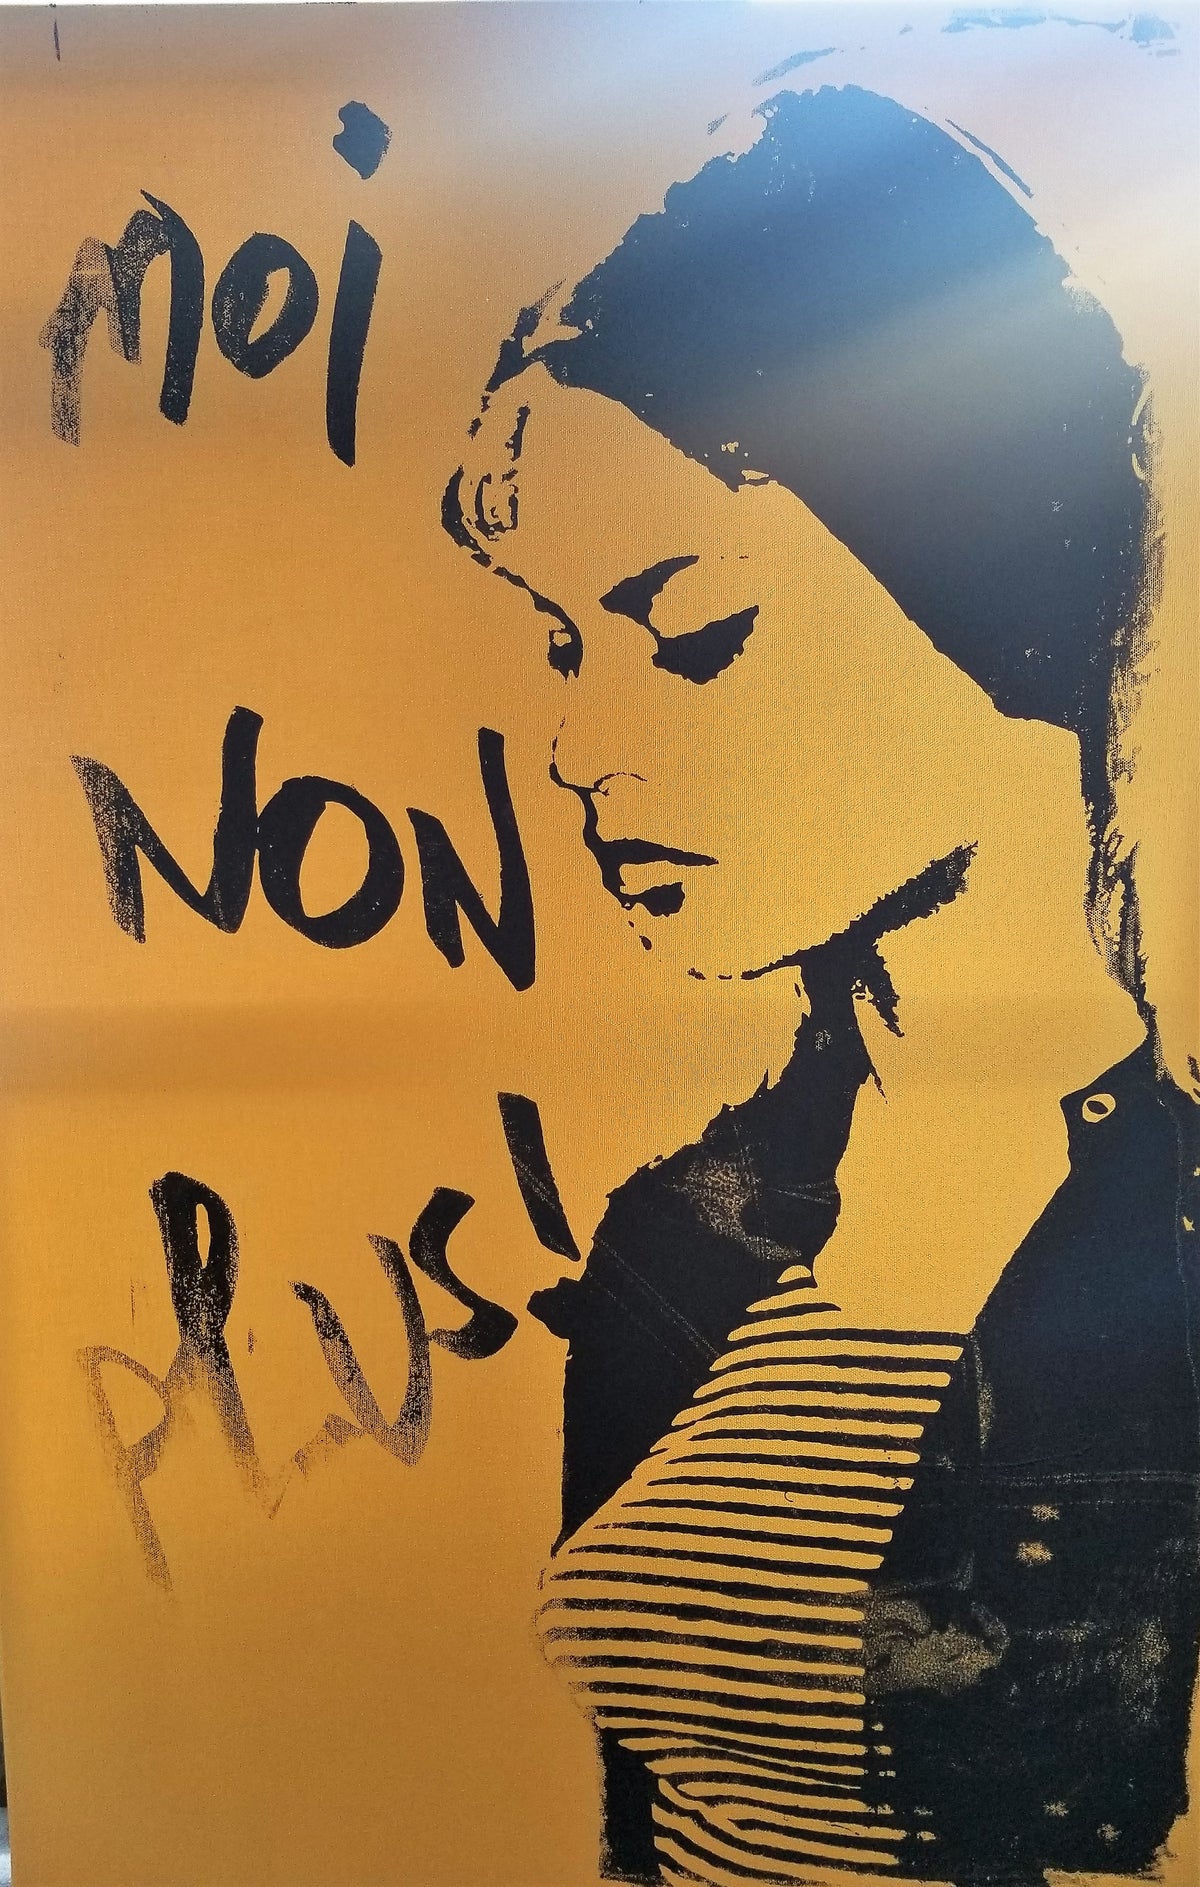 Original Artwork "Moi non Plus" (Me Netiher) by Gainsbourd & Godard feat. Bebe Brigiitte Bardot on gold canvas - Politically Incorrect